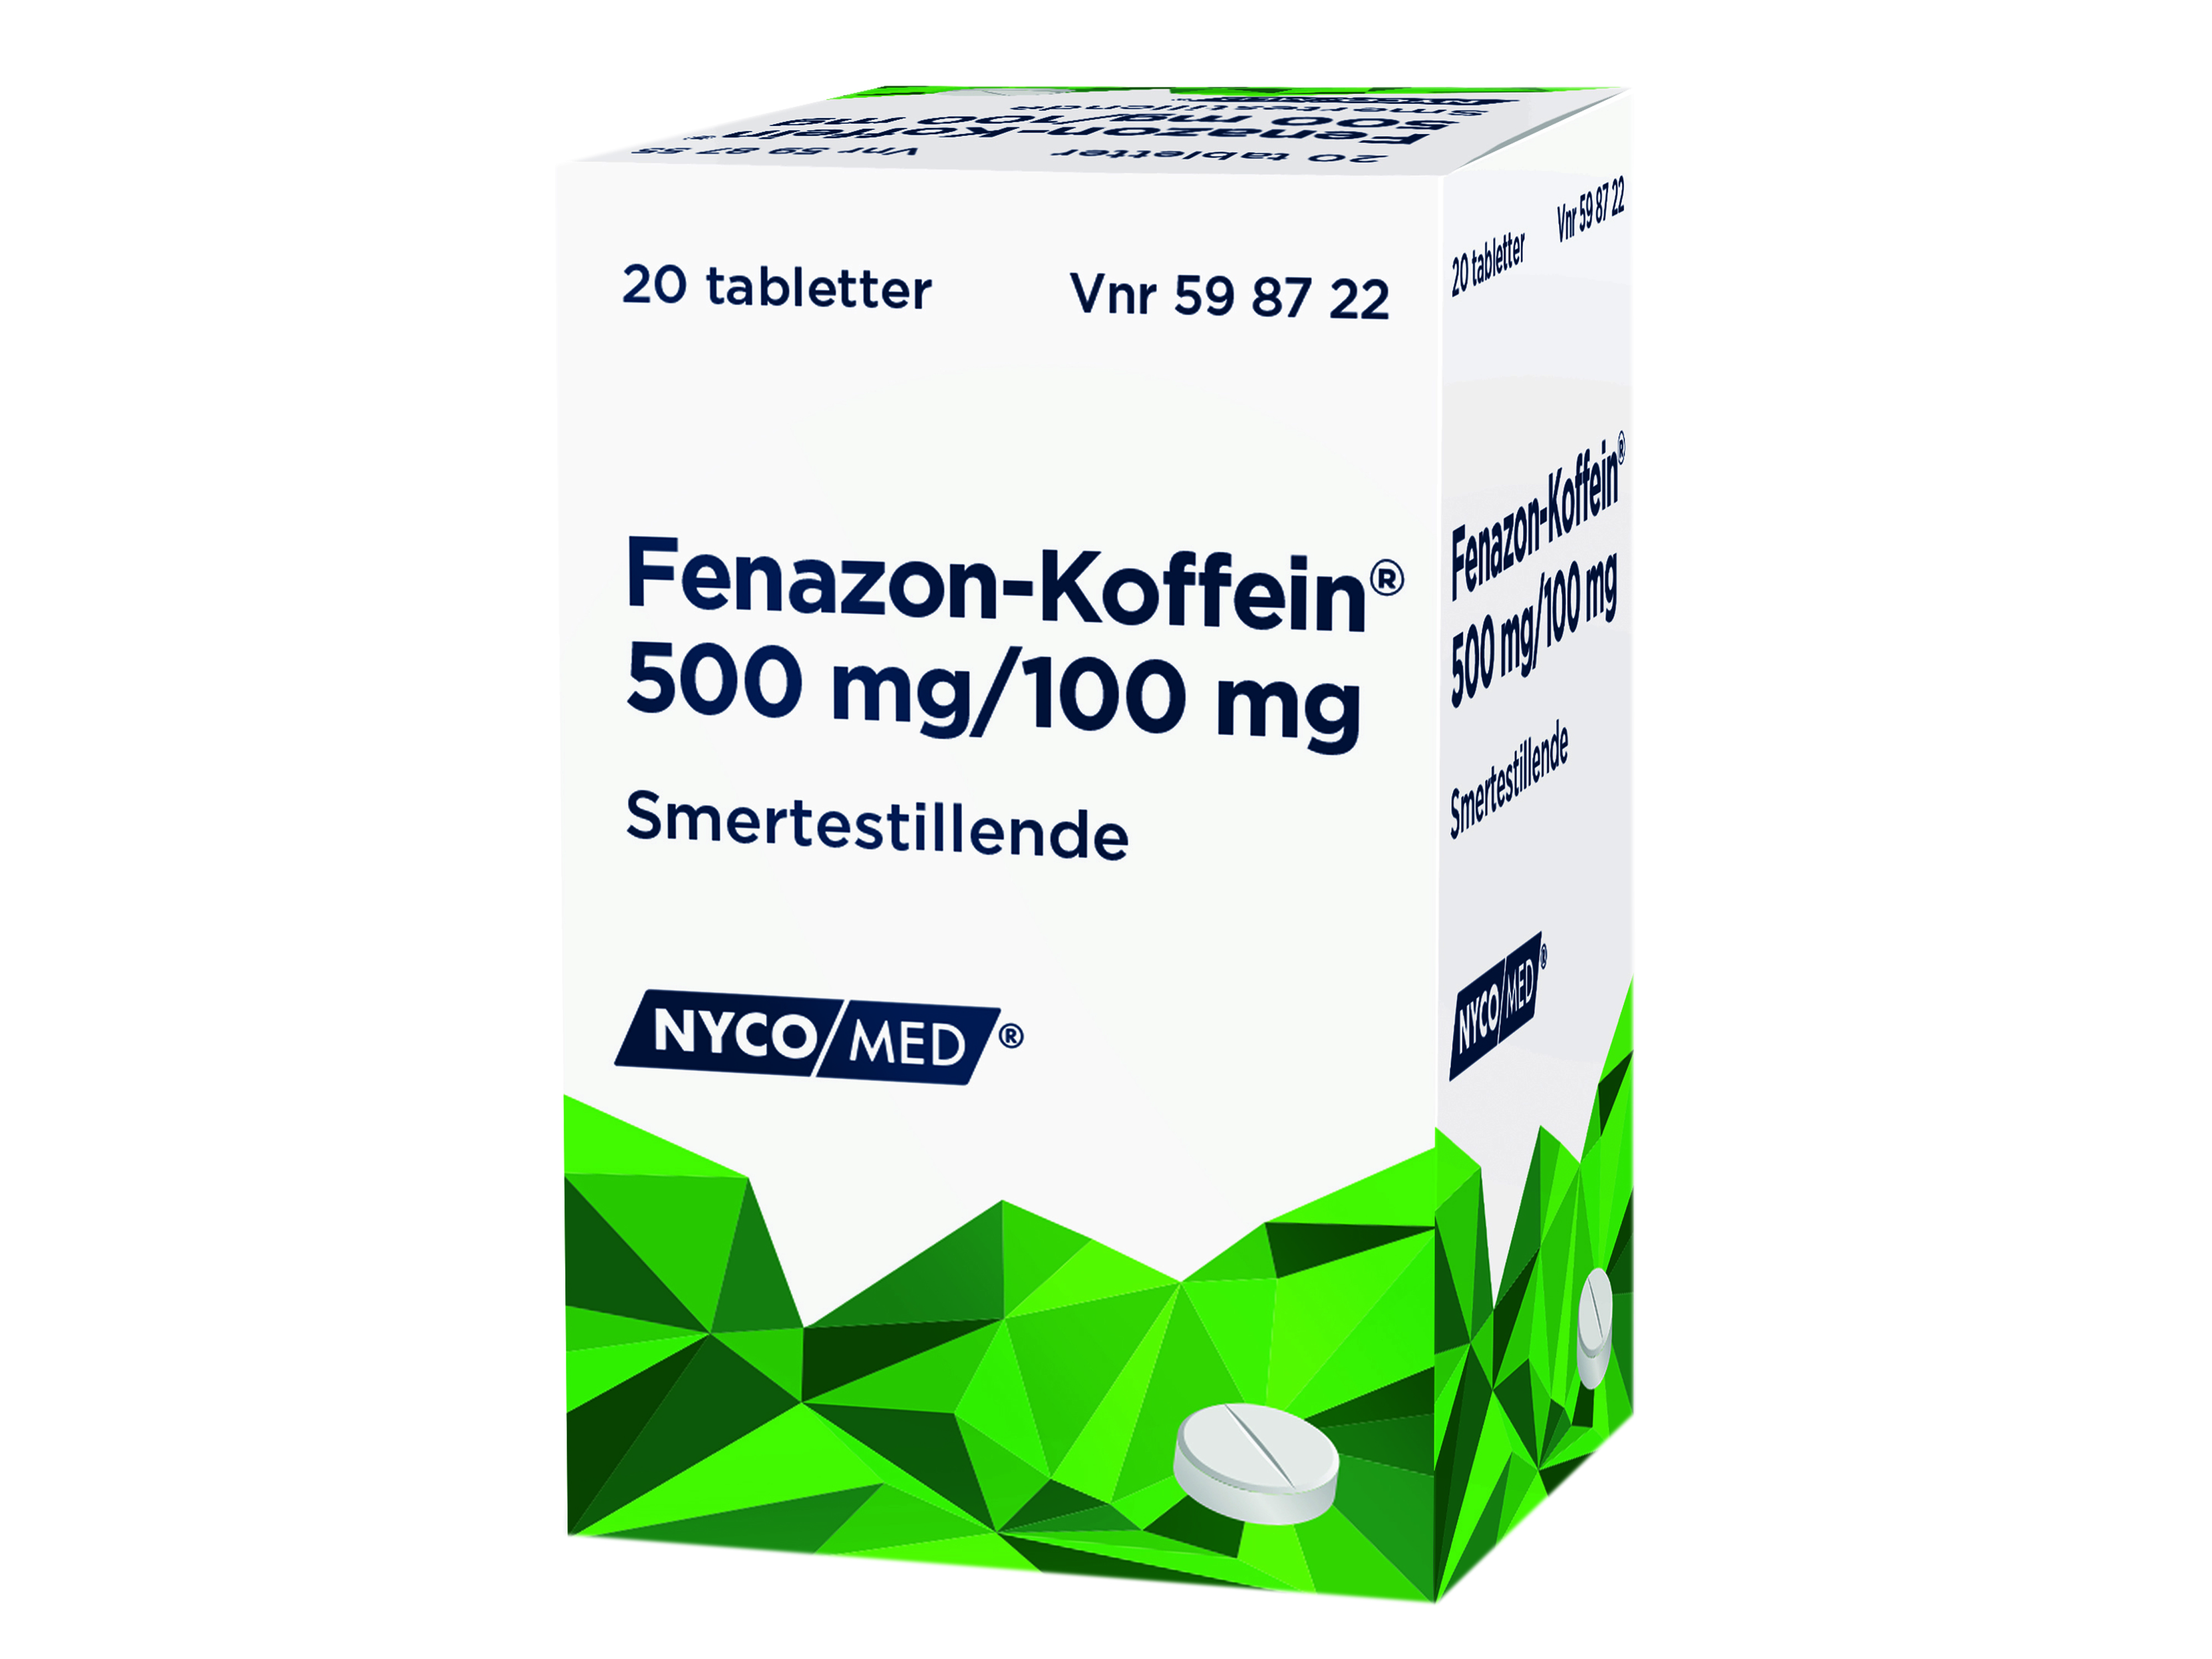 Fenazon-Koffein Tabletter, 20 stk.